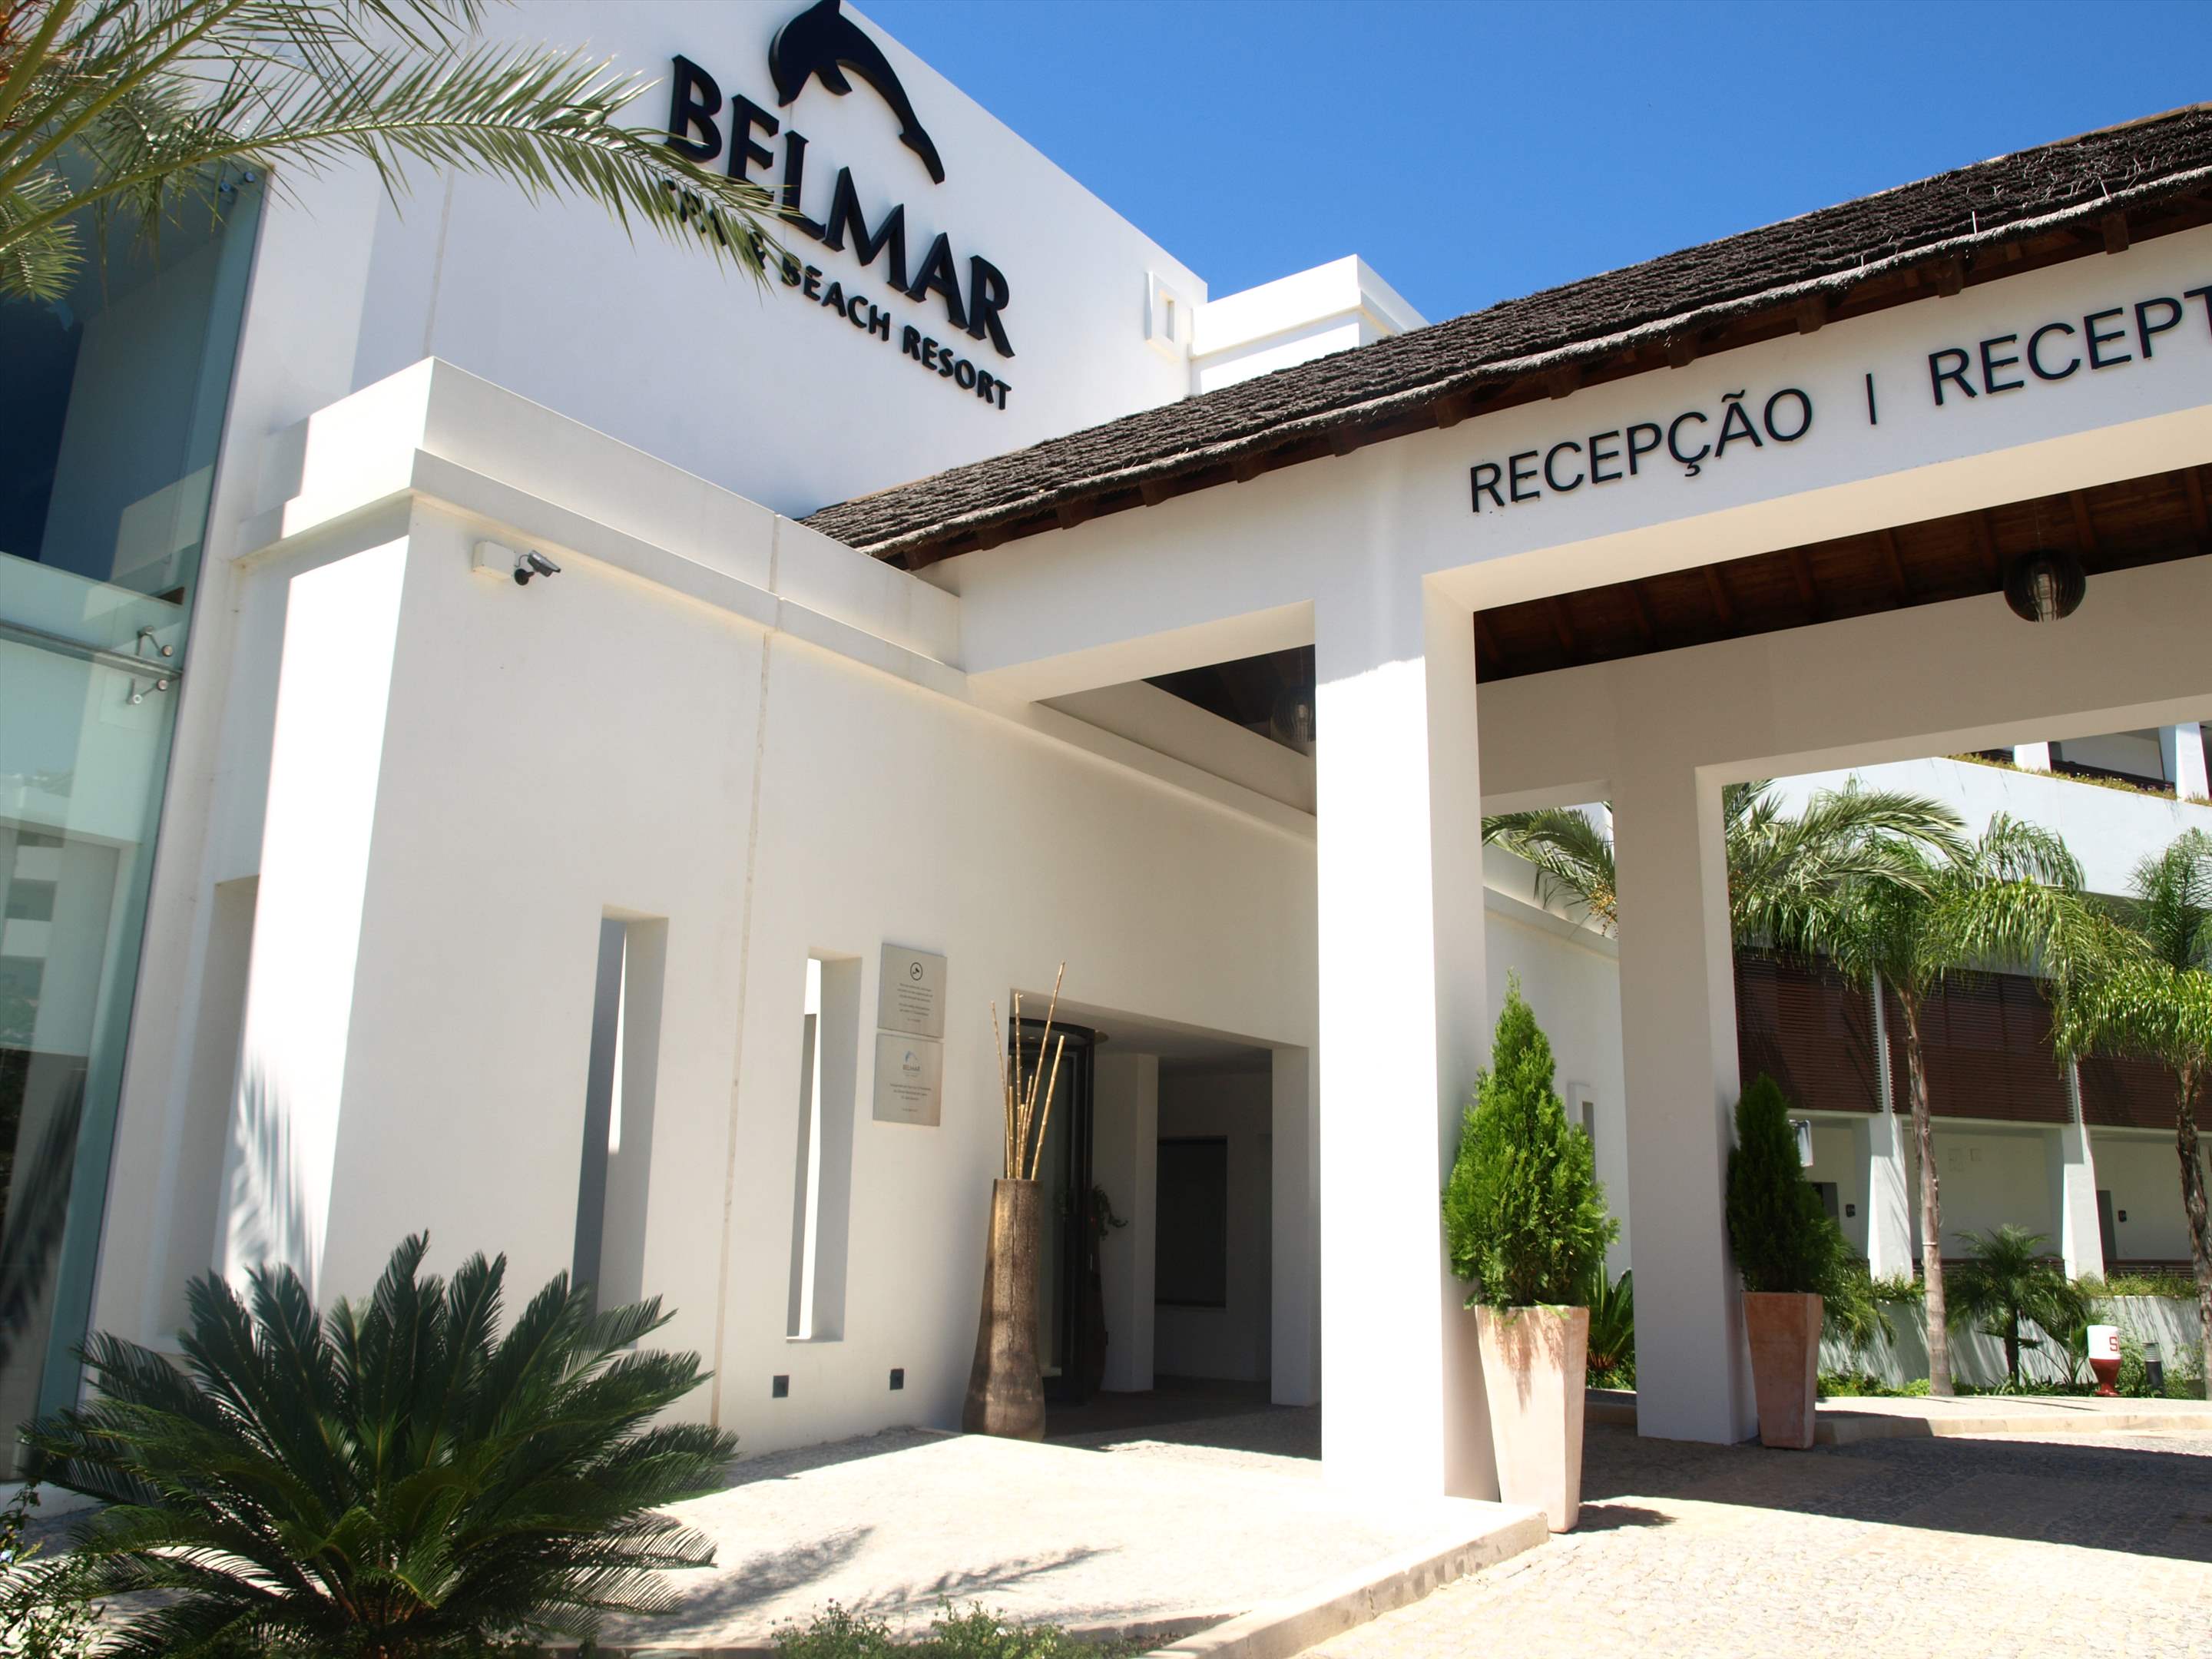 Belmar Aparthotel 2 Bed Duplex Apt- Room Only, 2 bedroom apartment in Belmar Resort, Algarve Photo #48